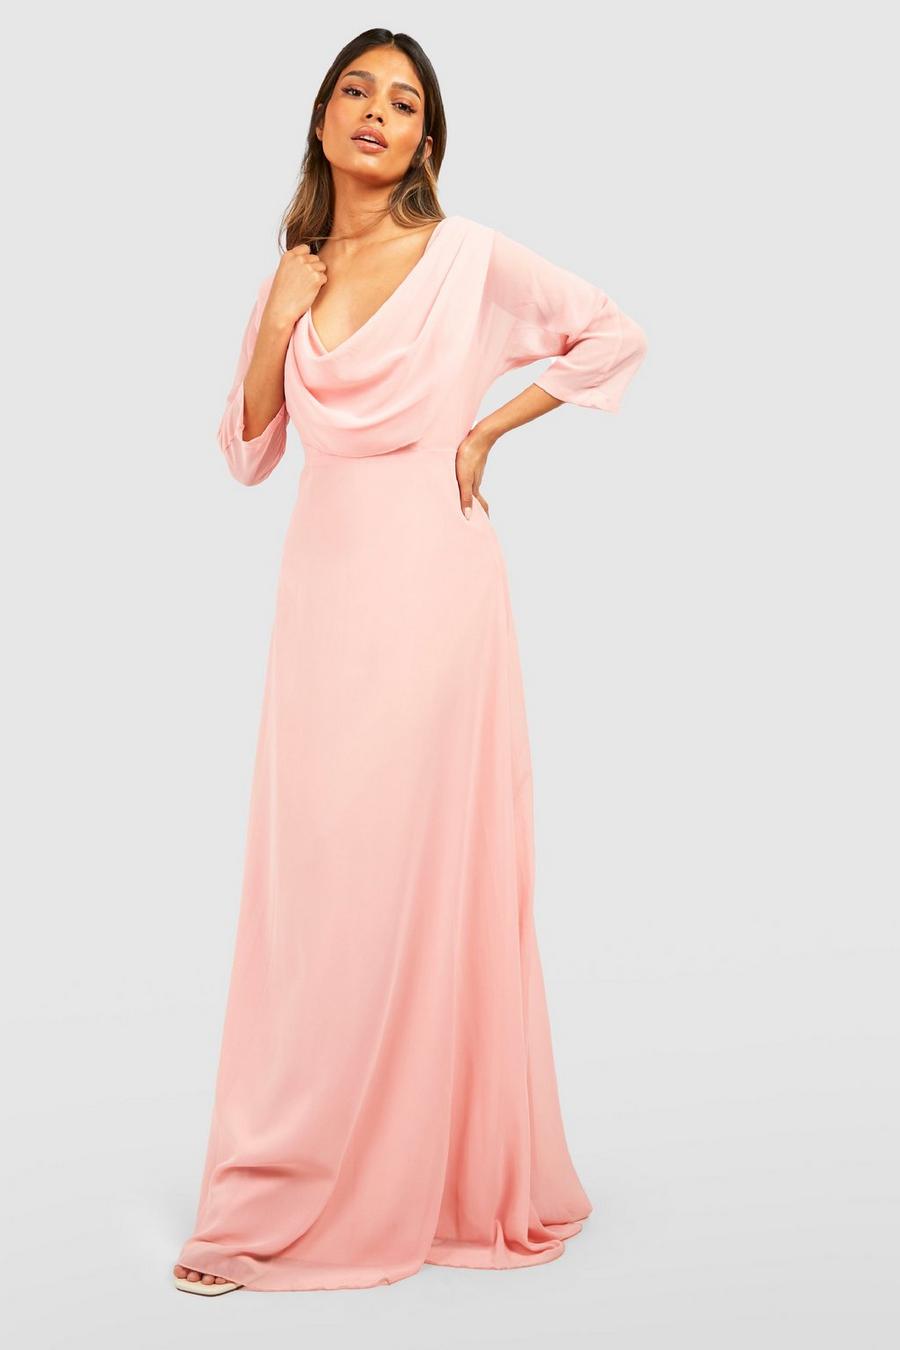 Rose pink שמלת מקסי עם מחשוף נשפך בגב עם אפקט וילון